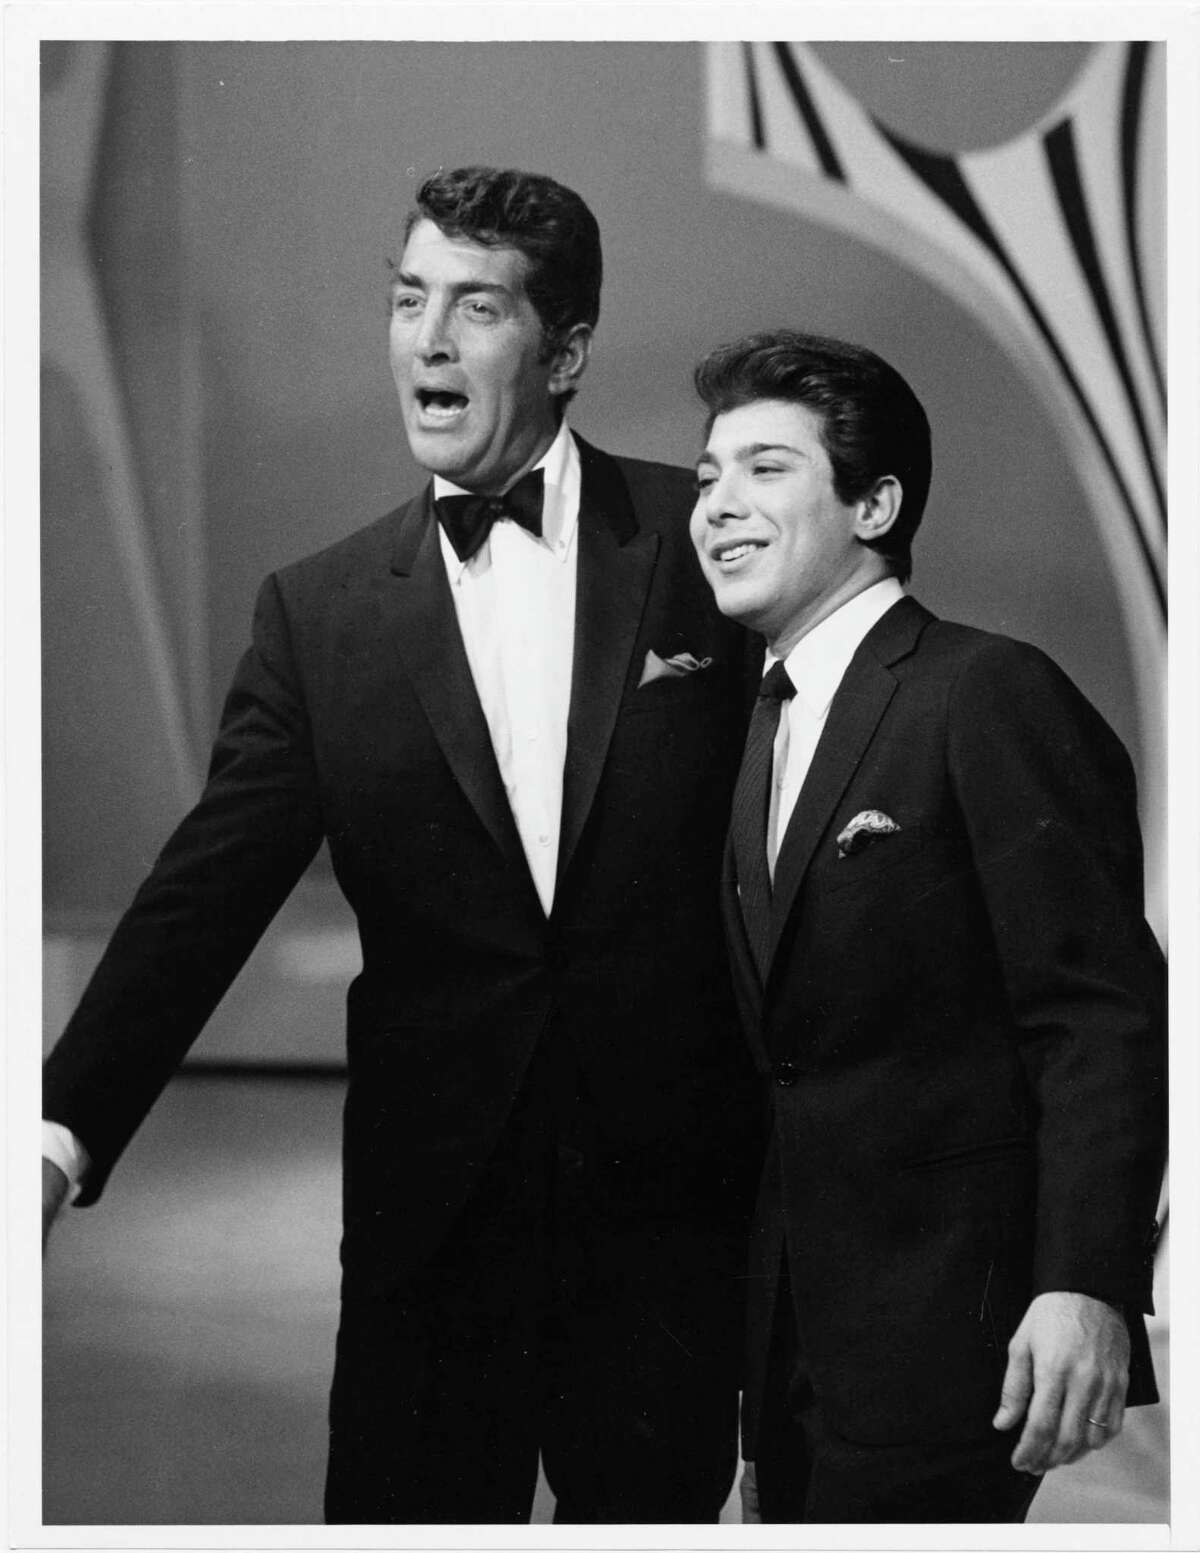 Dean Martin [left] Paul Anka [right] March 30 1966